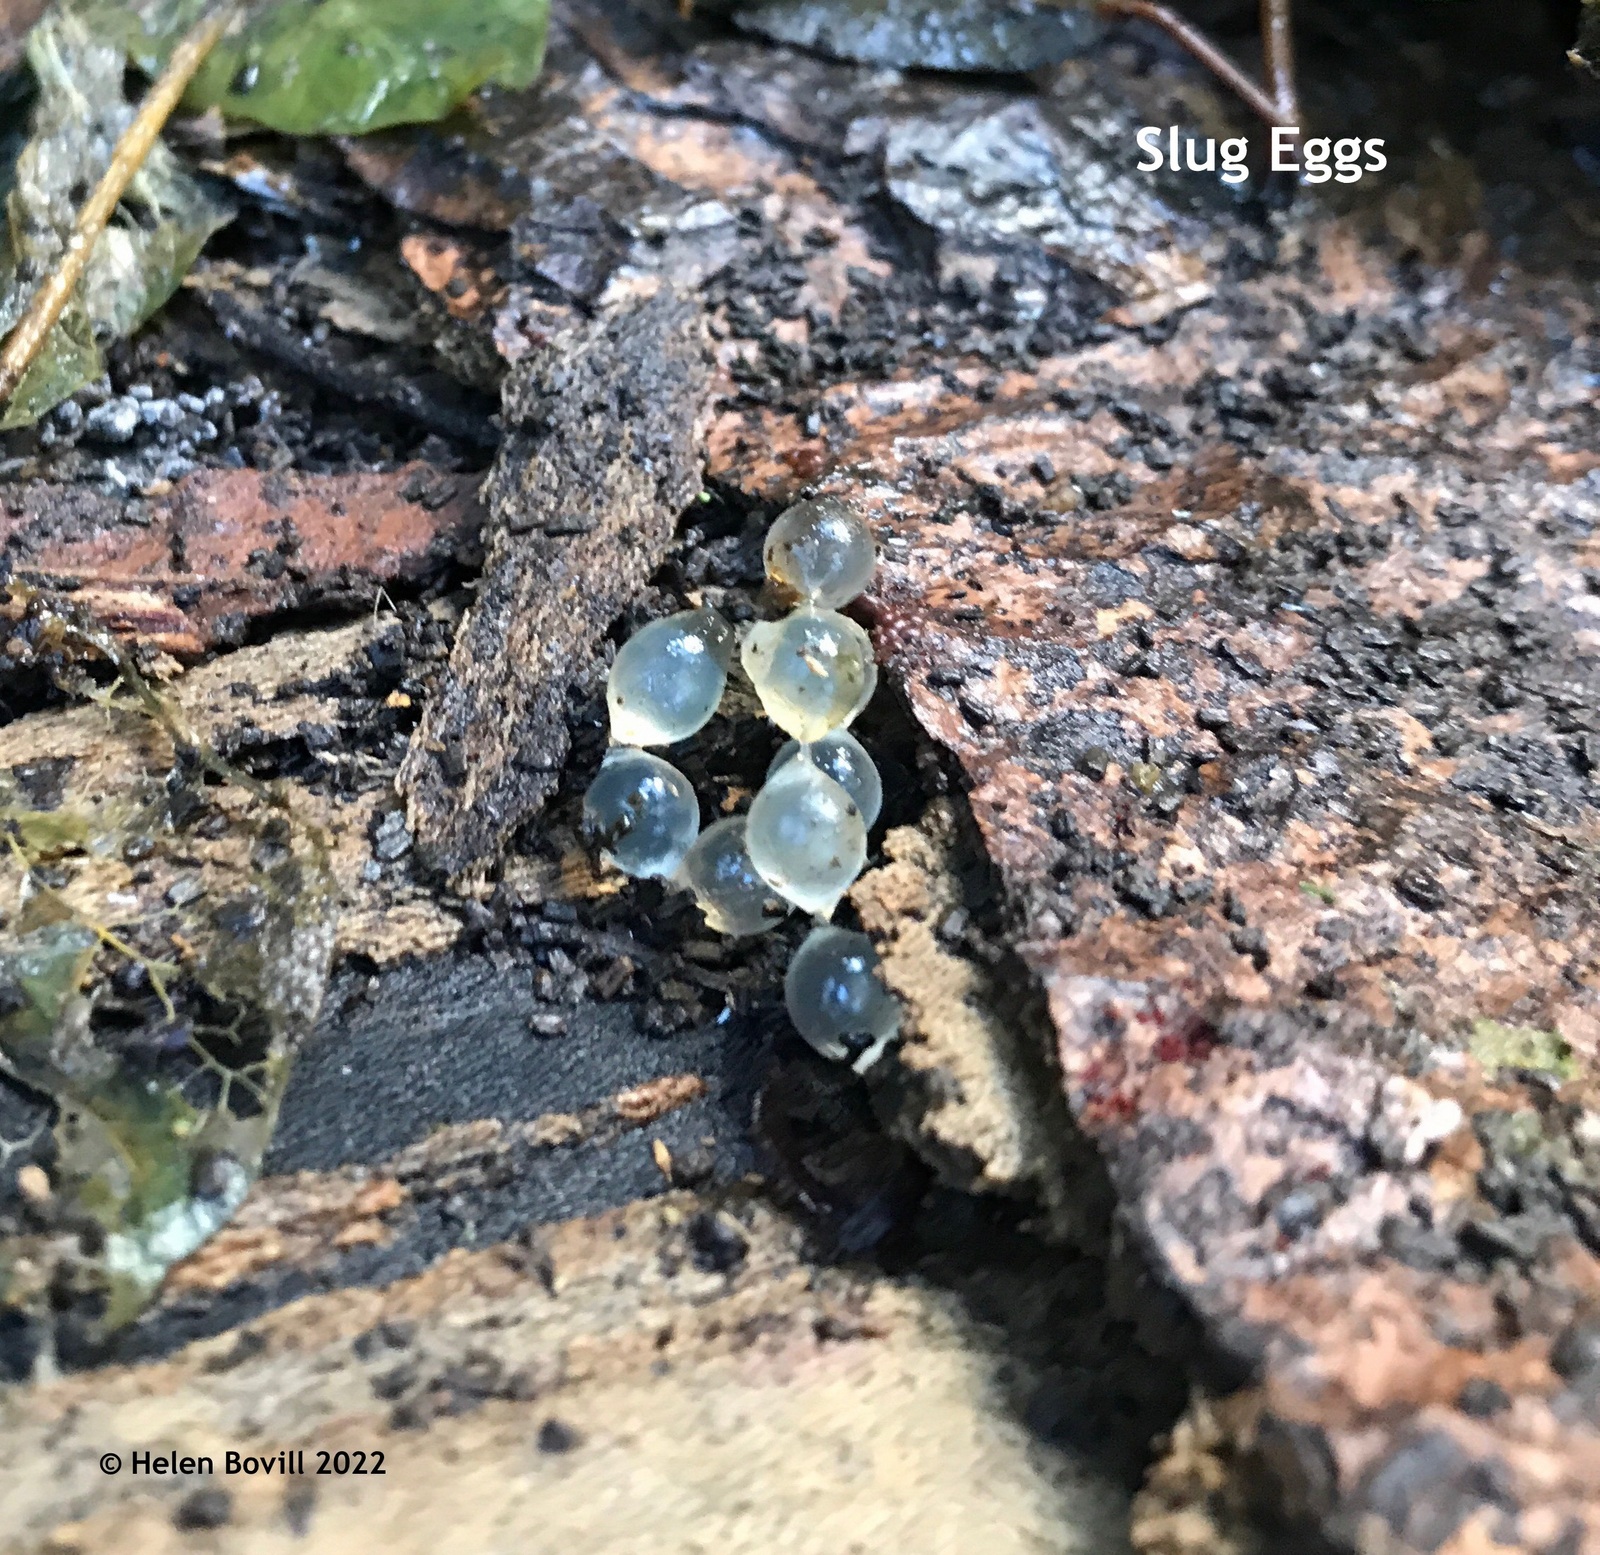 The tiny eggs of a slug